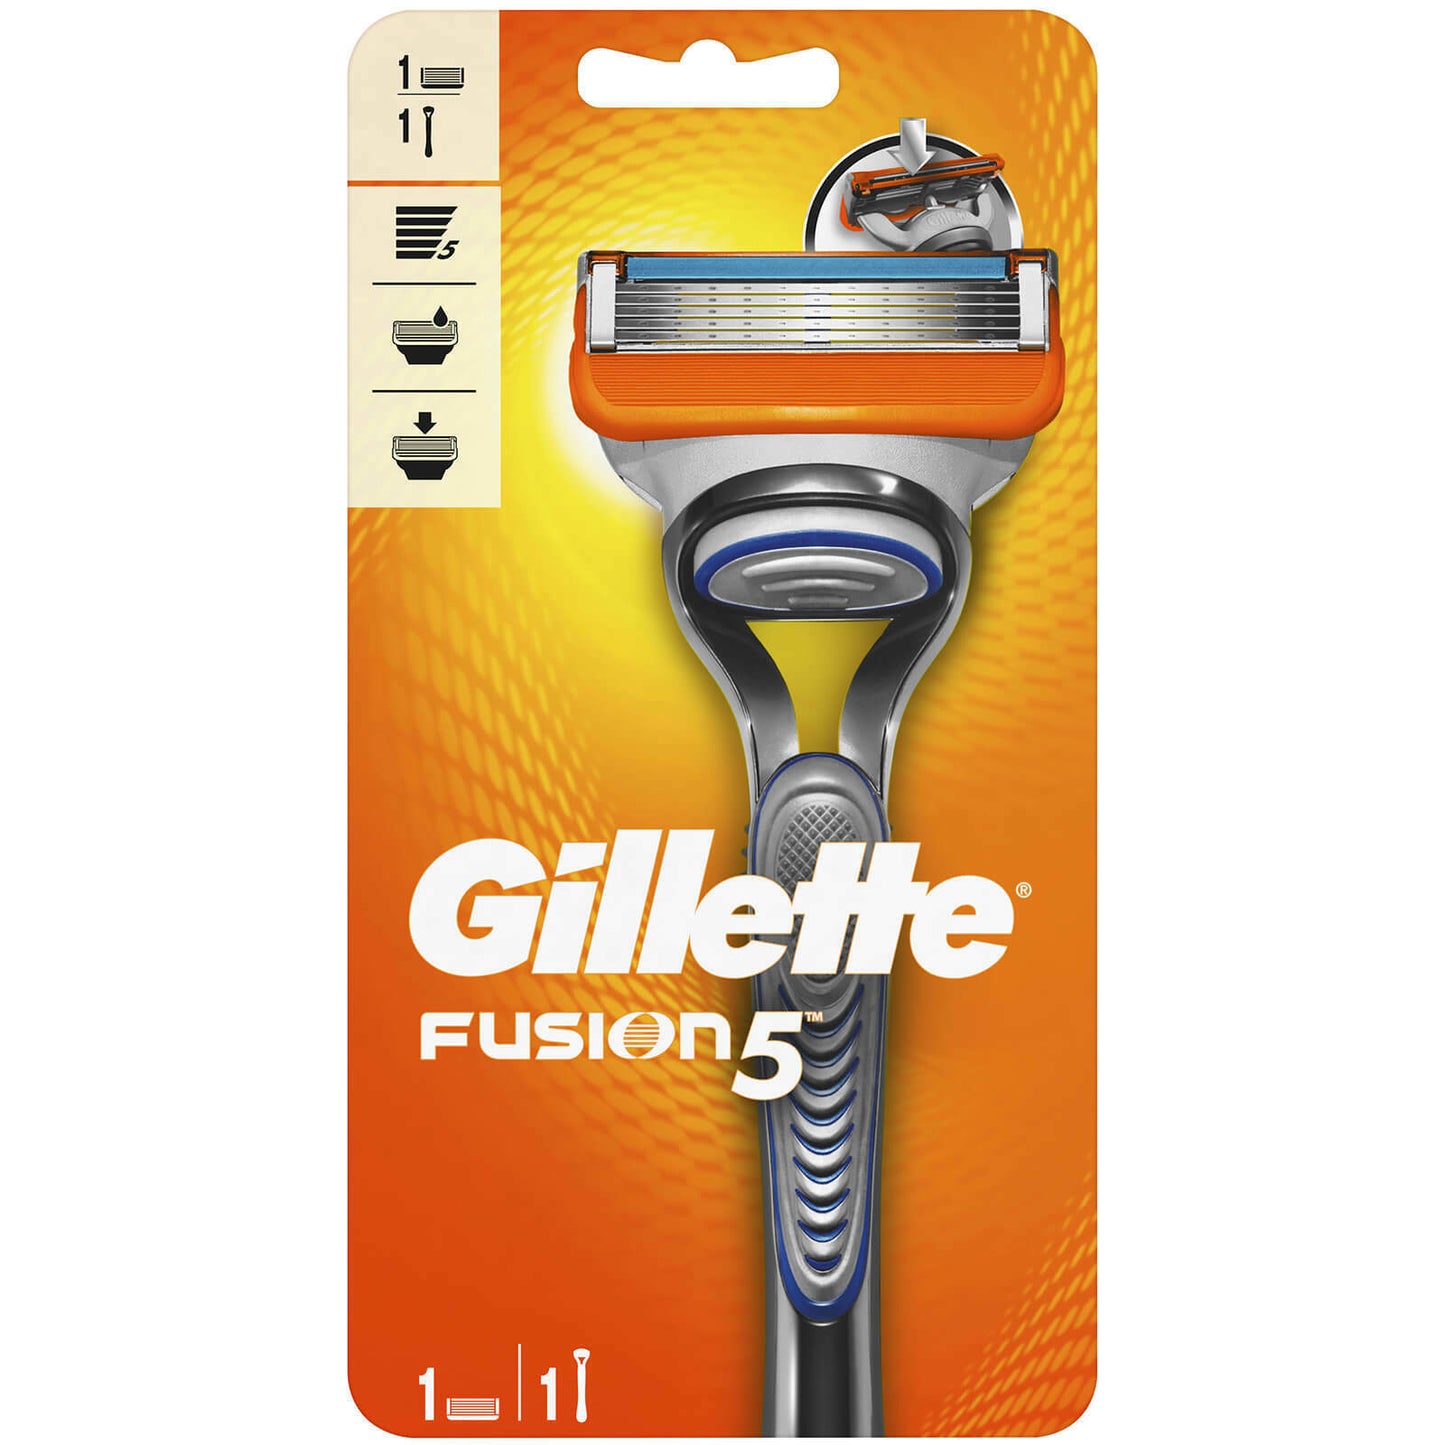 Gillette Fusion 5 Men's Shaving Razor Handle